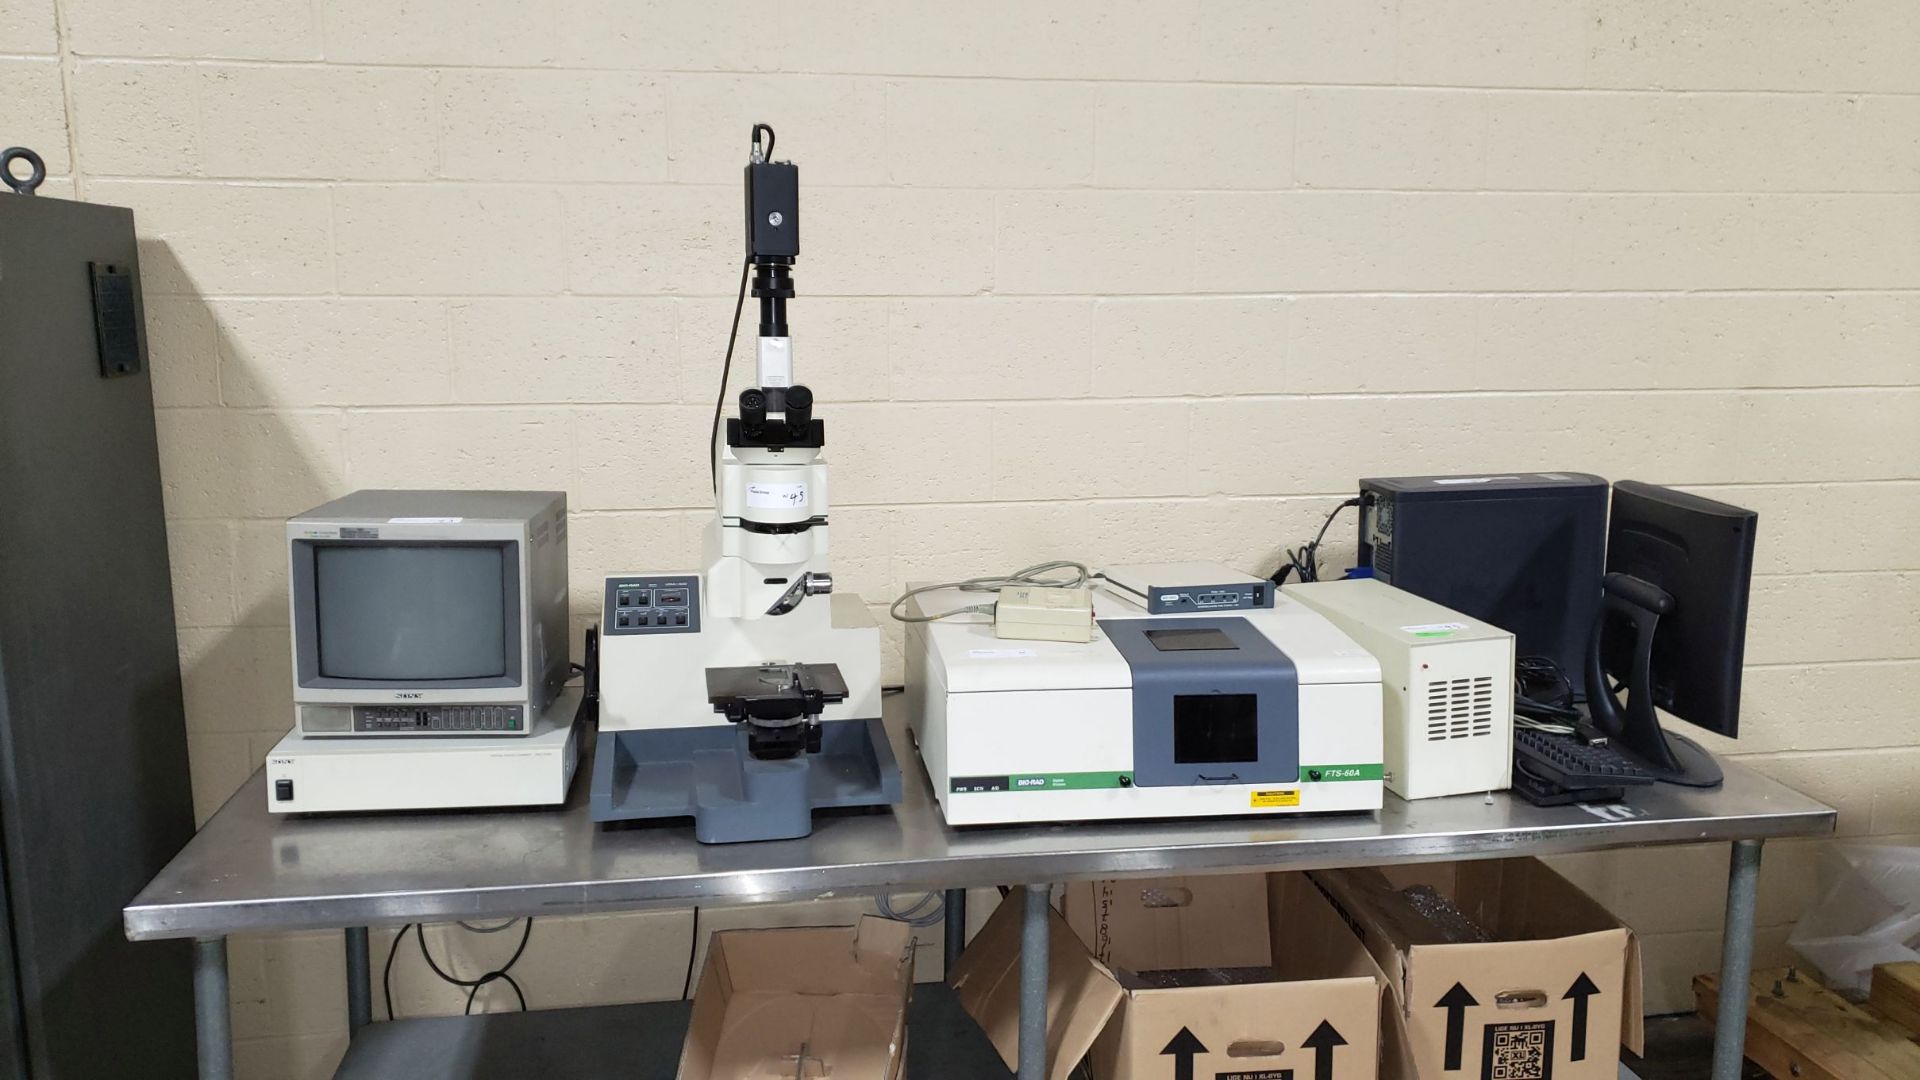 BIO RAD FTS60A/ 896 Spectrometer, BIO RAD UMA500 Microscope and DIGILAB FTIR Spectrometer